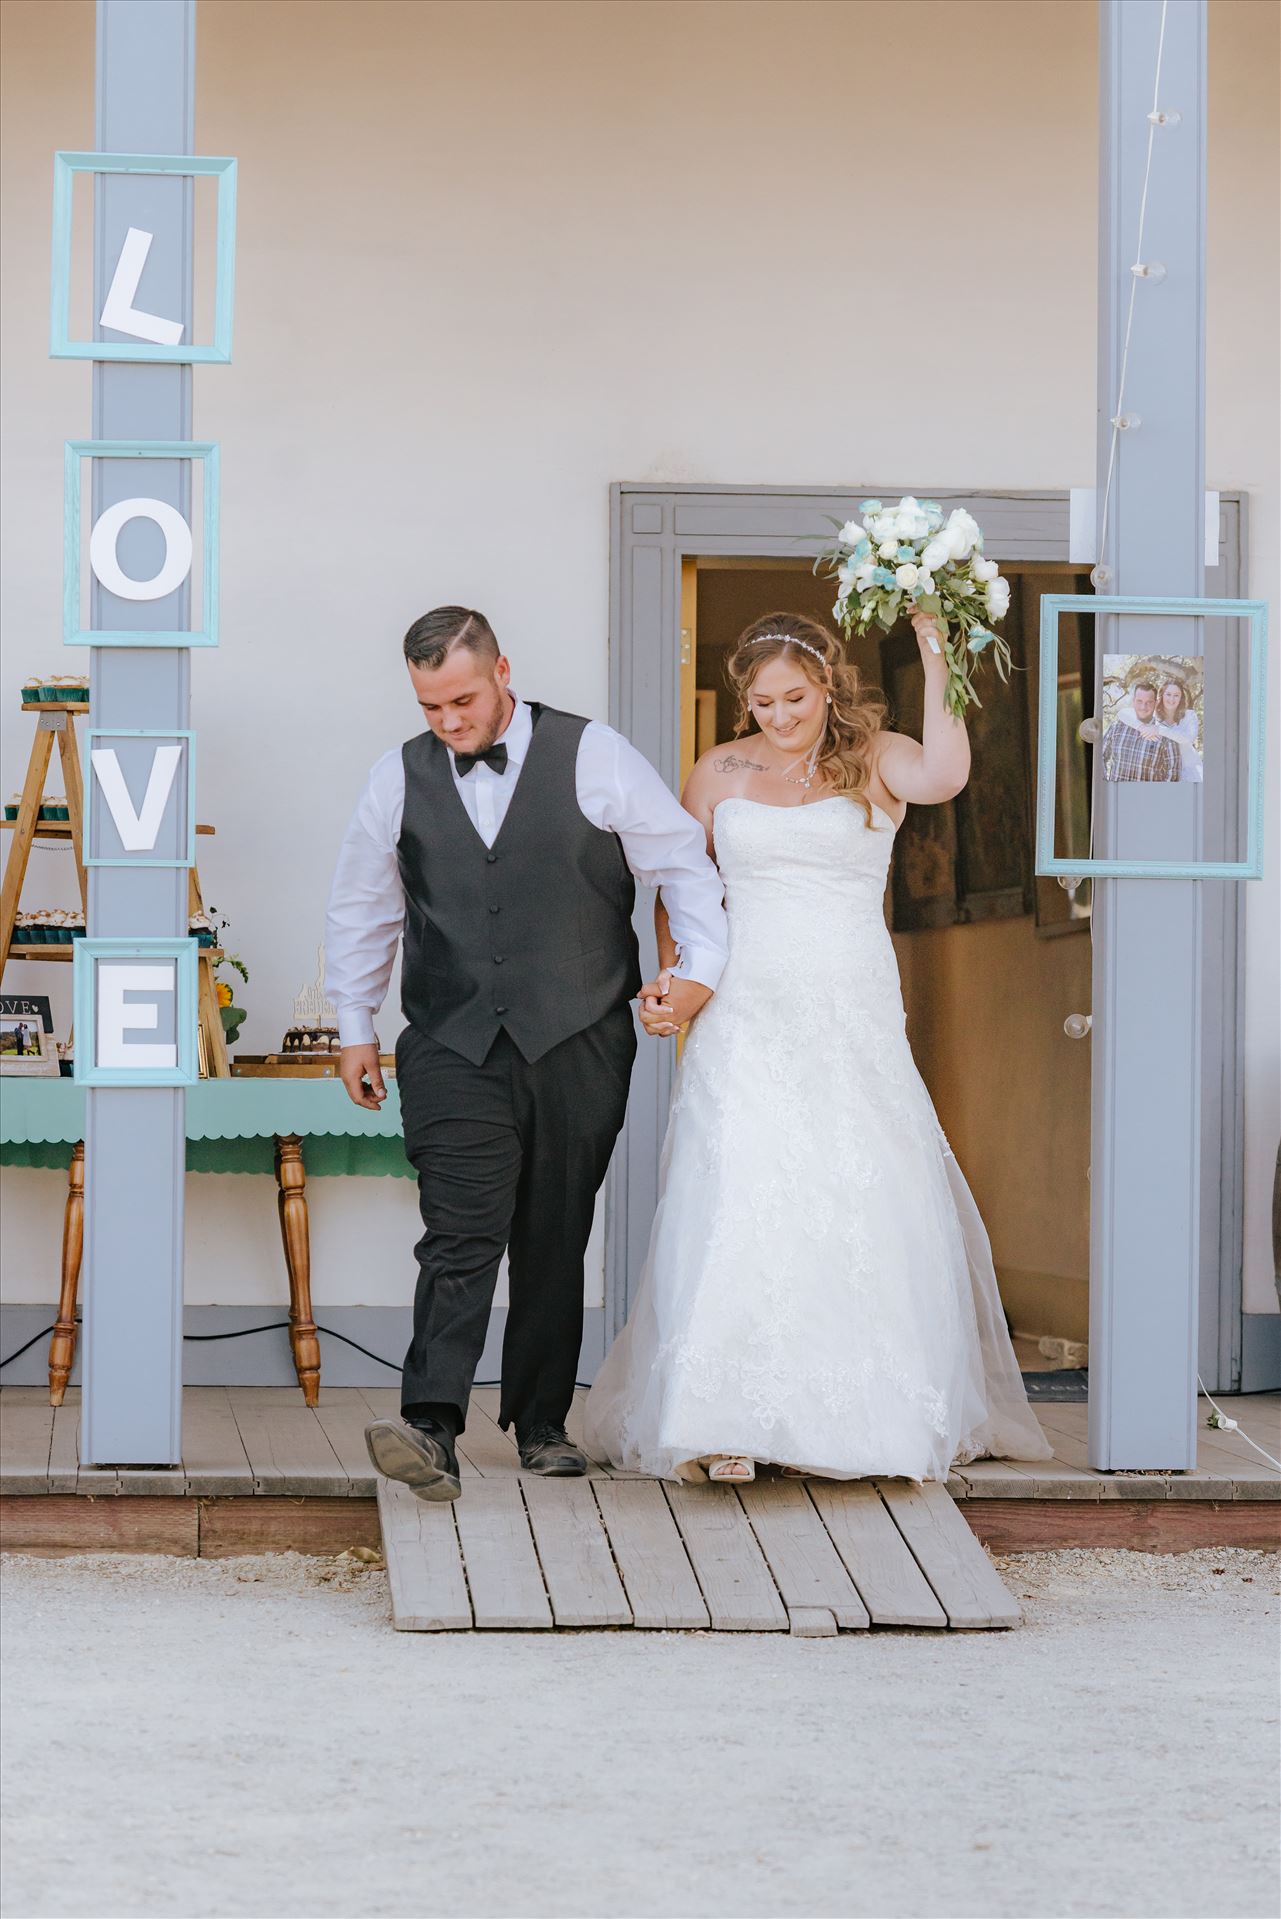 Cherie and Brandon 099 Mirror's Edge Photography, a San Luis Obispo Wedding Photographer, captures a wedding at the Historic Dana Adobe in Nipomo California.  Grand Entrance from the Dana Adobe. by Sarah Williams